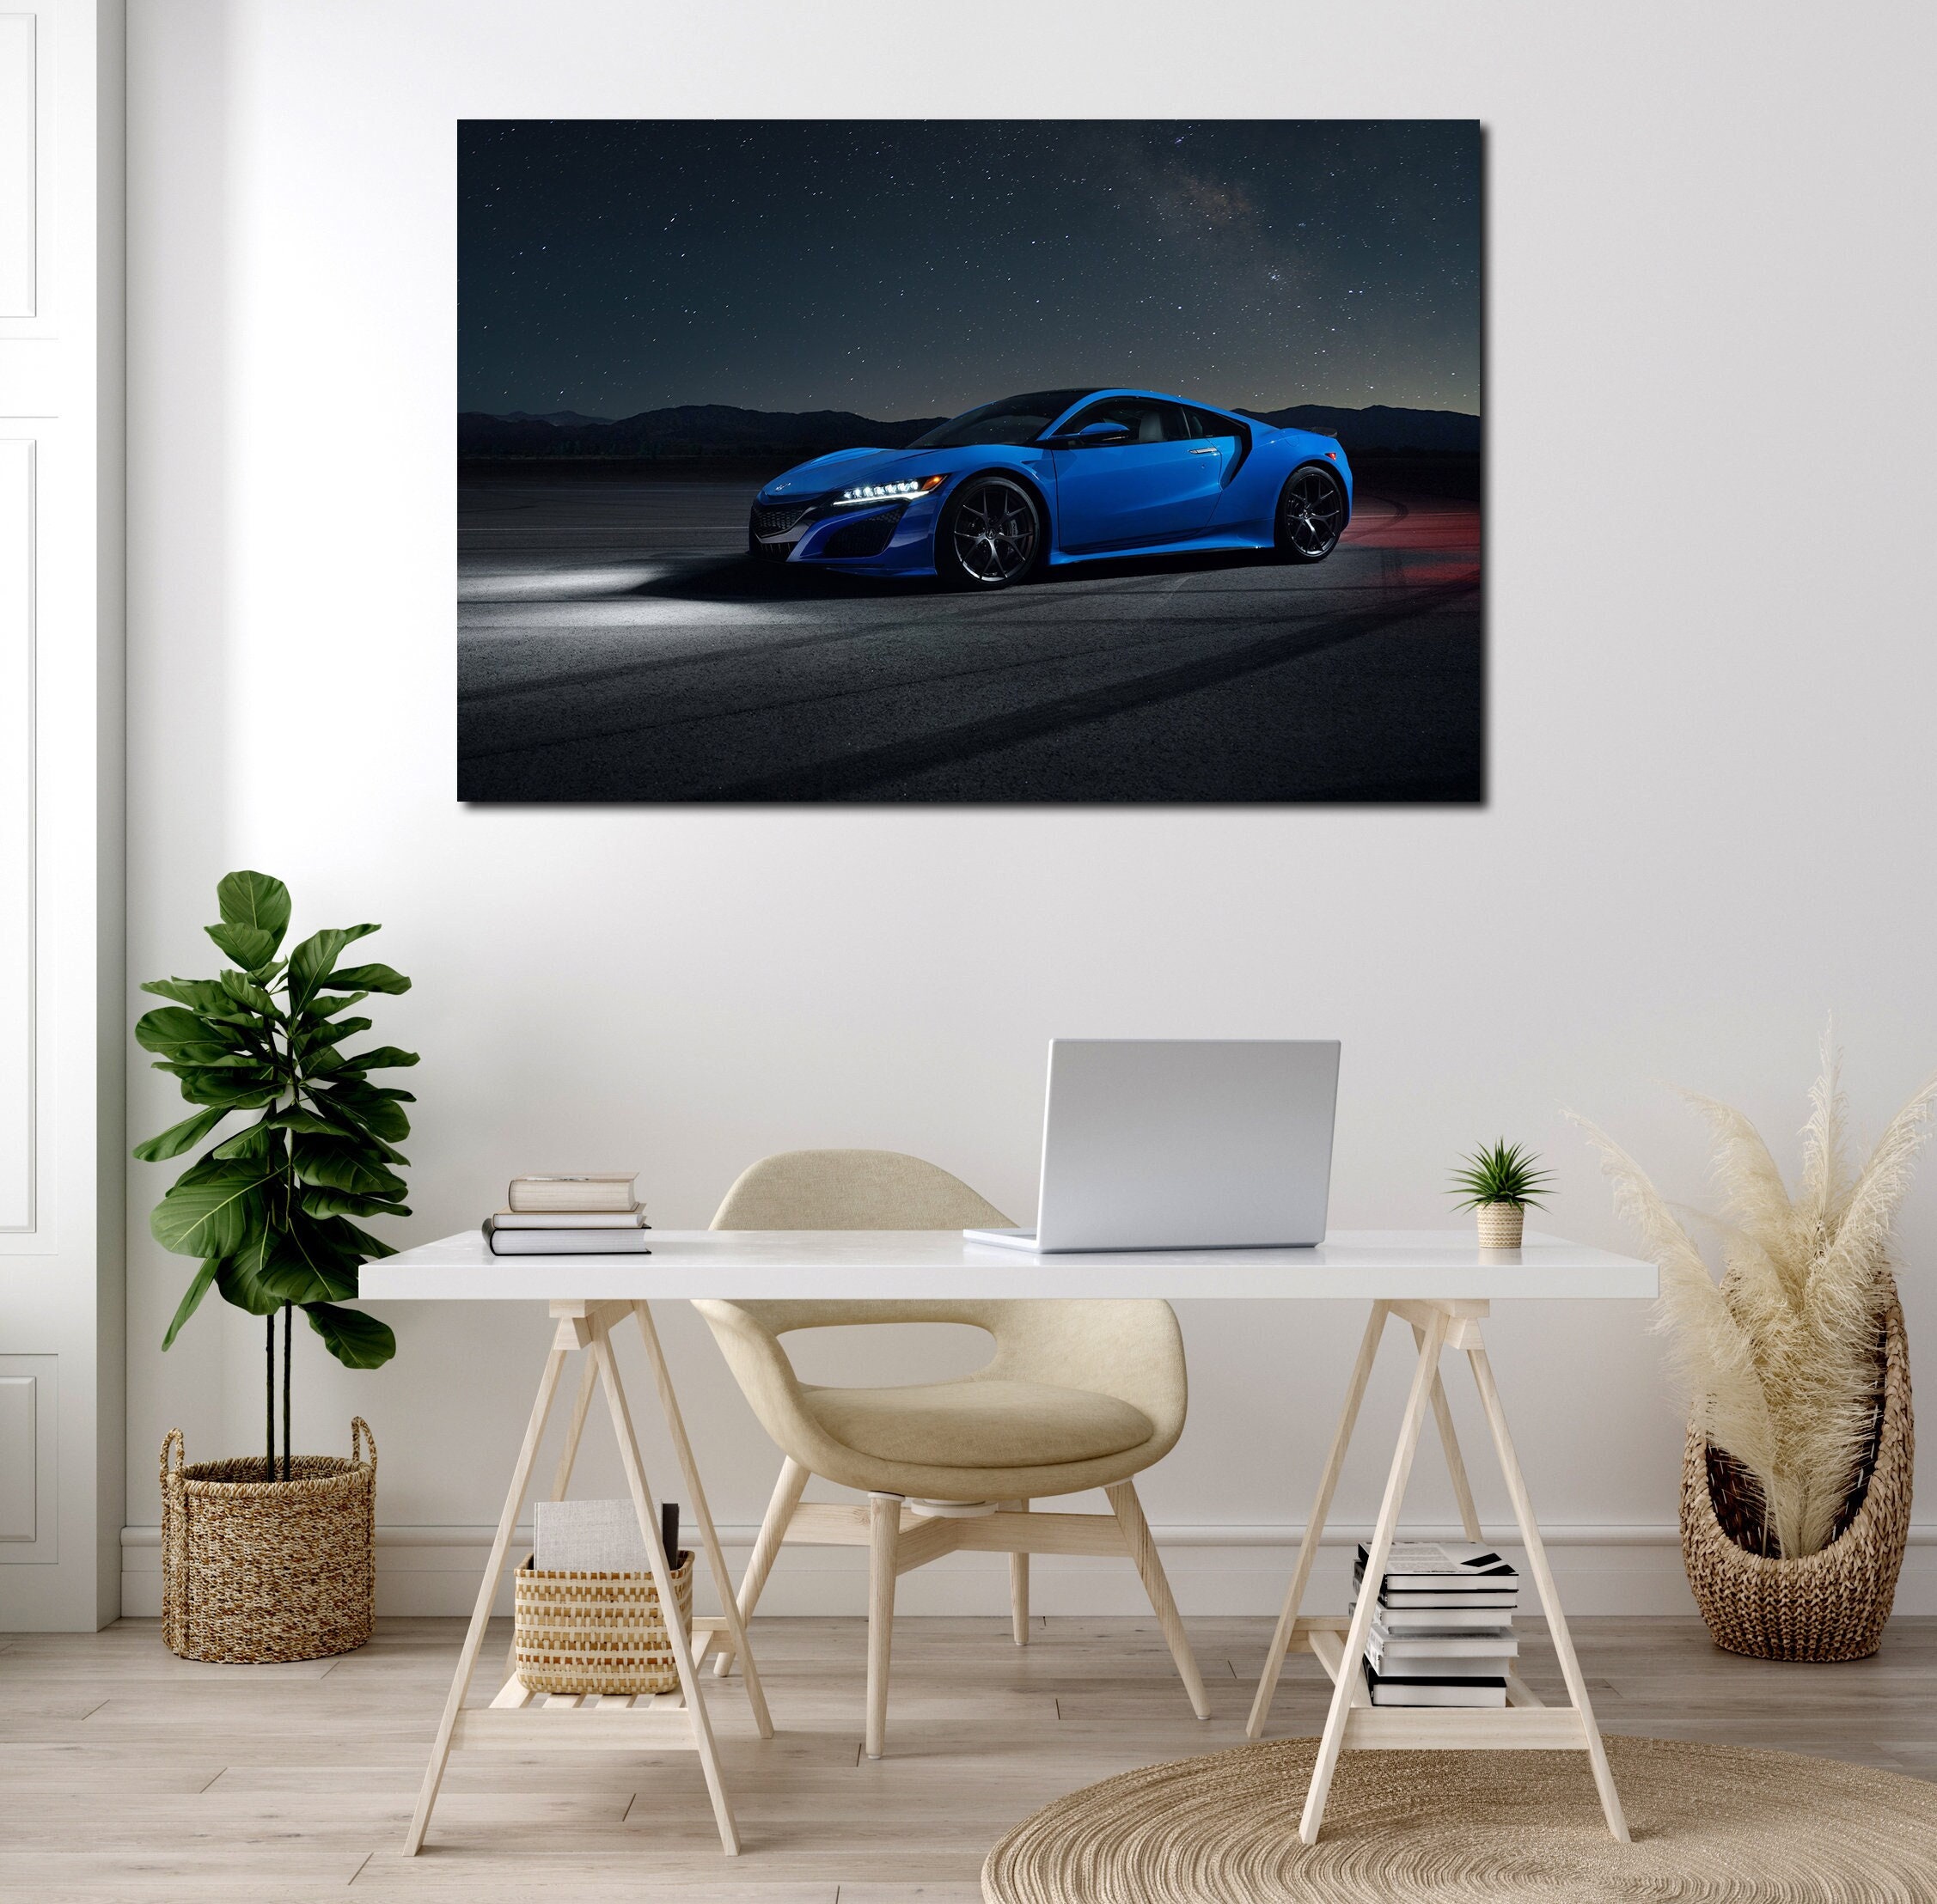 Acura NSX Wall Art Canvas Set Blue Supercar on Night Background